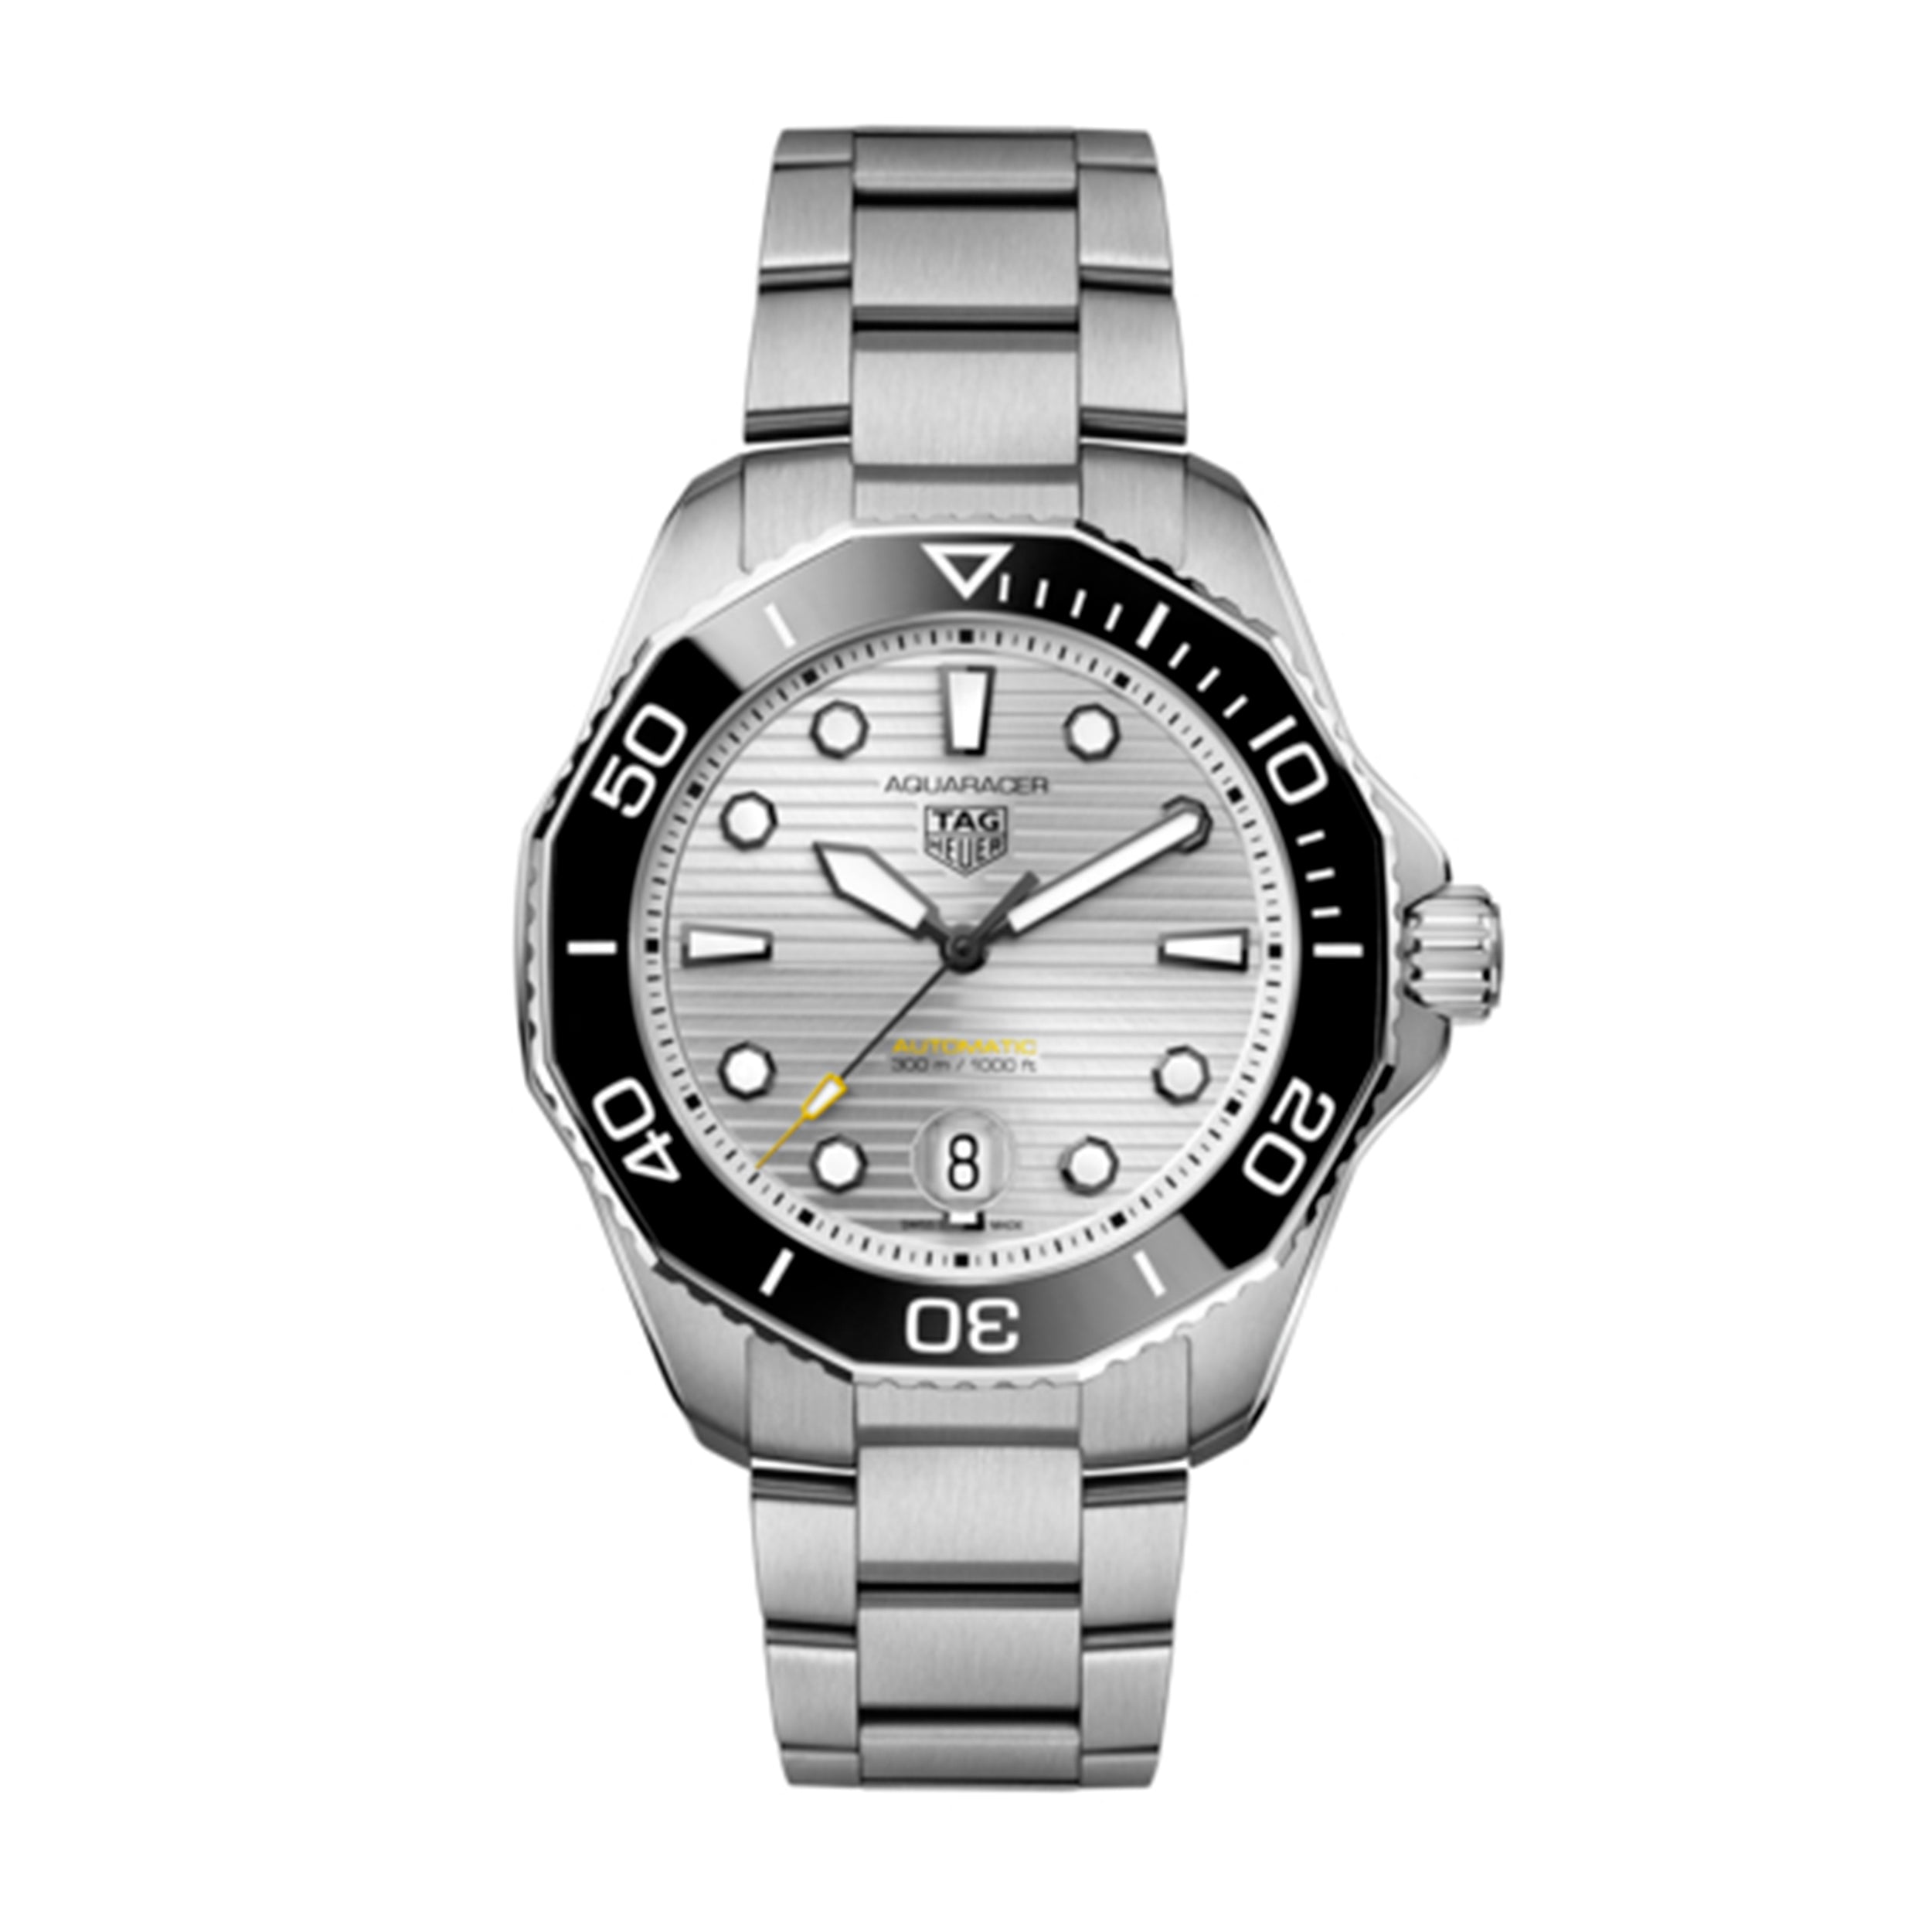 TAG Heuer Aquaracer Professional 300, Automatic Watch, Harley's Time LLC